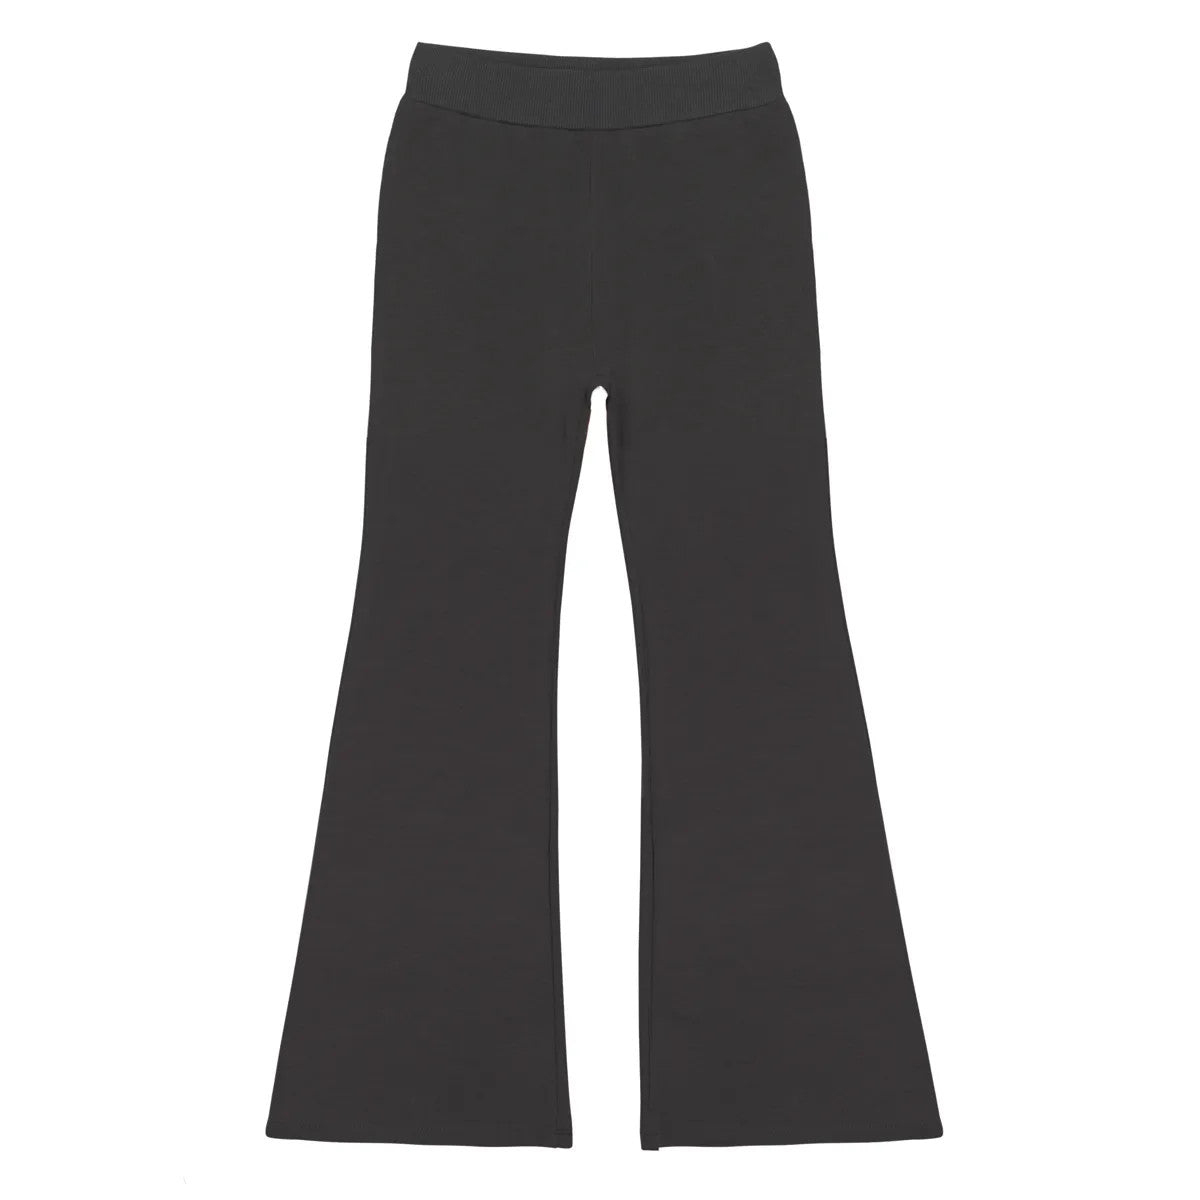 Little Hedonist organic dark grey flared leggings, made of organic cotton